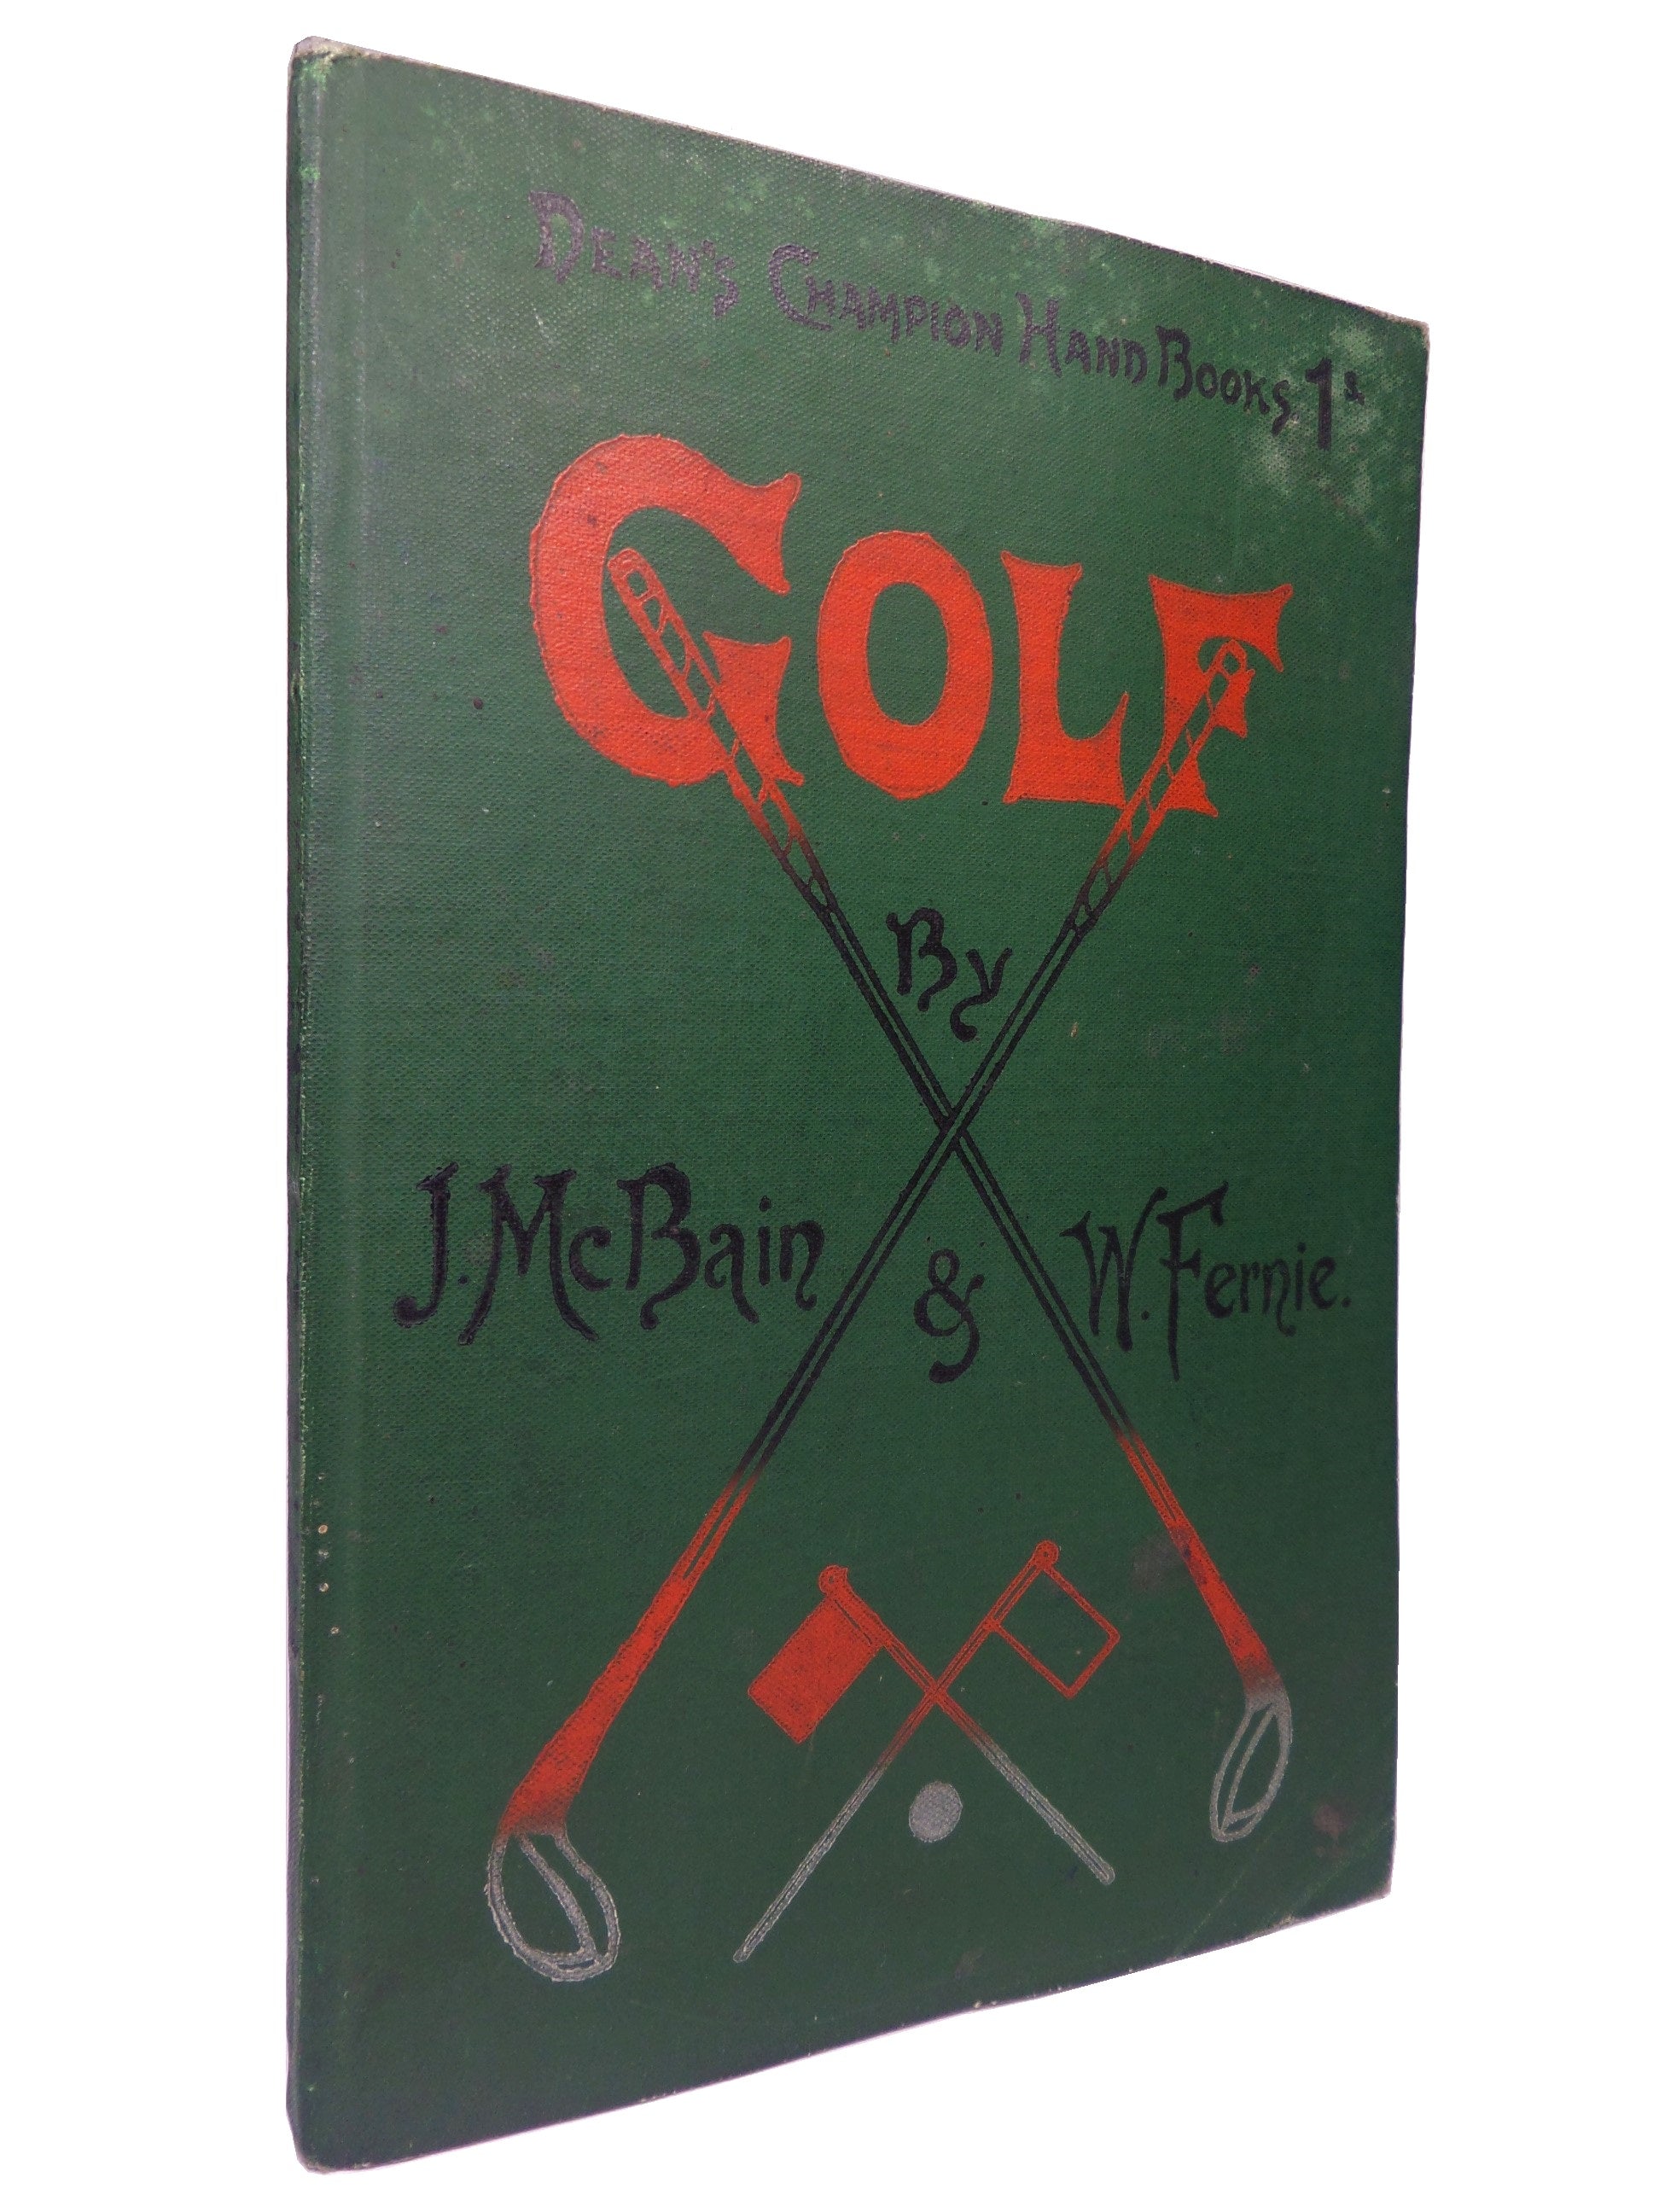 DEAN'S CHAMPION HANDBOOKS: GOLF BY J. MCBAIN & W. FERNIE 1899